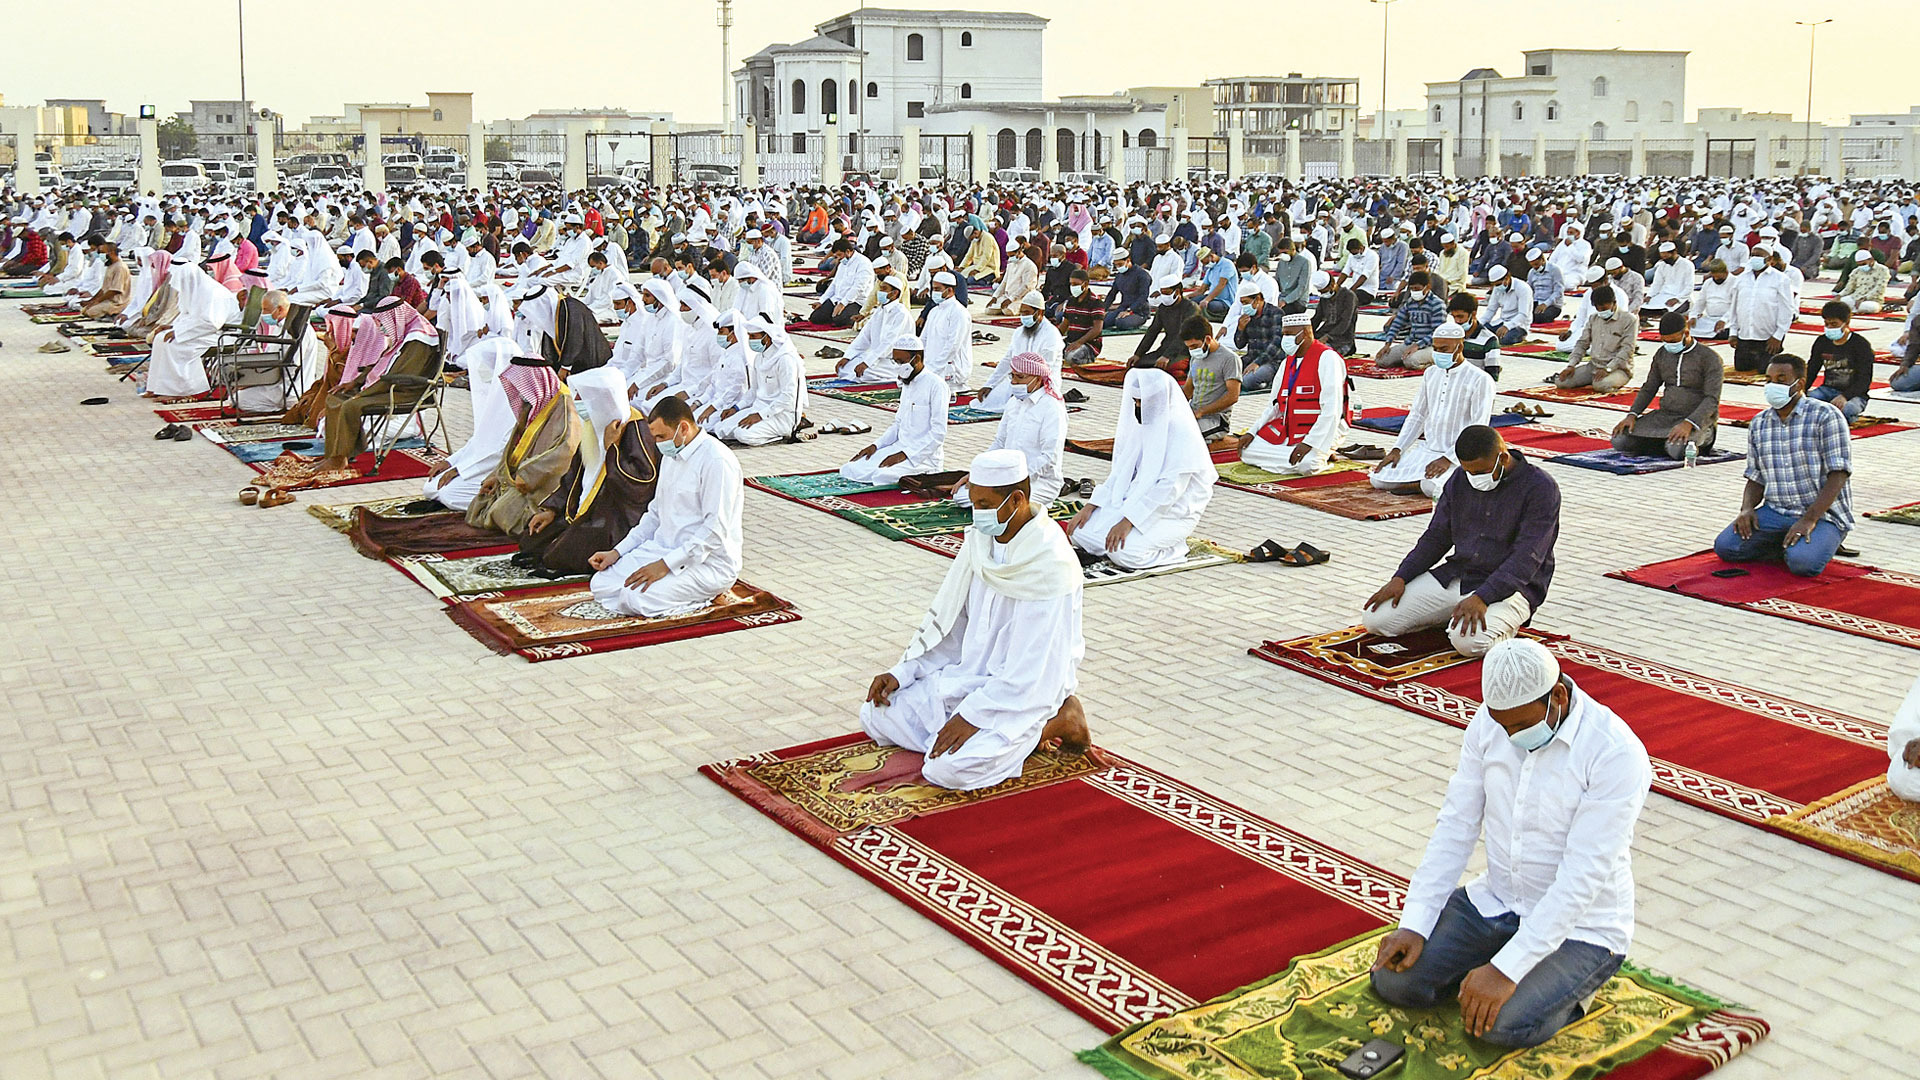 Awqaf Ministry Prepares More Than 900 Mosques, Praying Areas for Eid Al-Adha Prayers